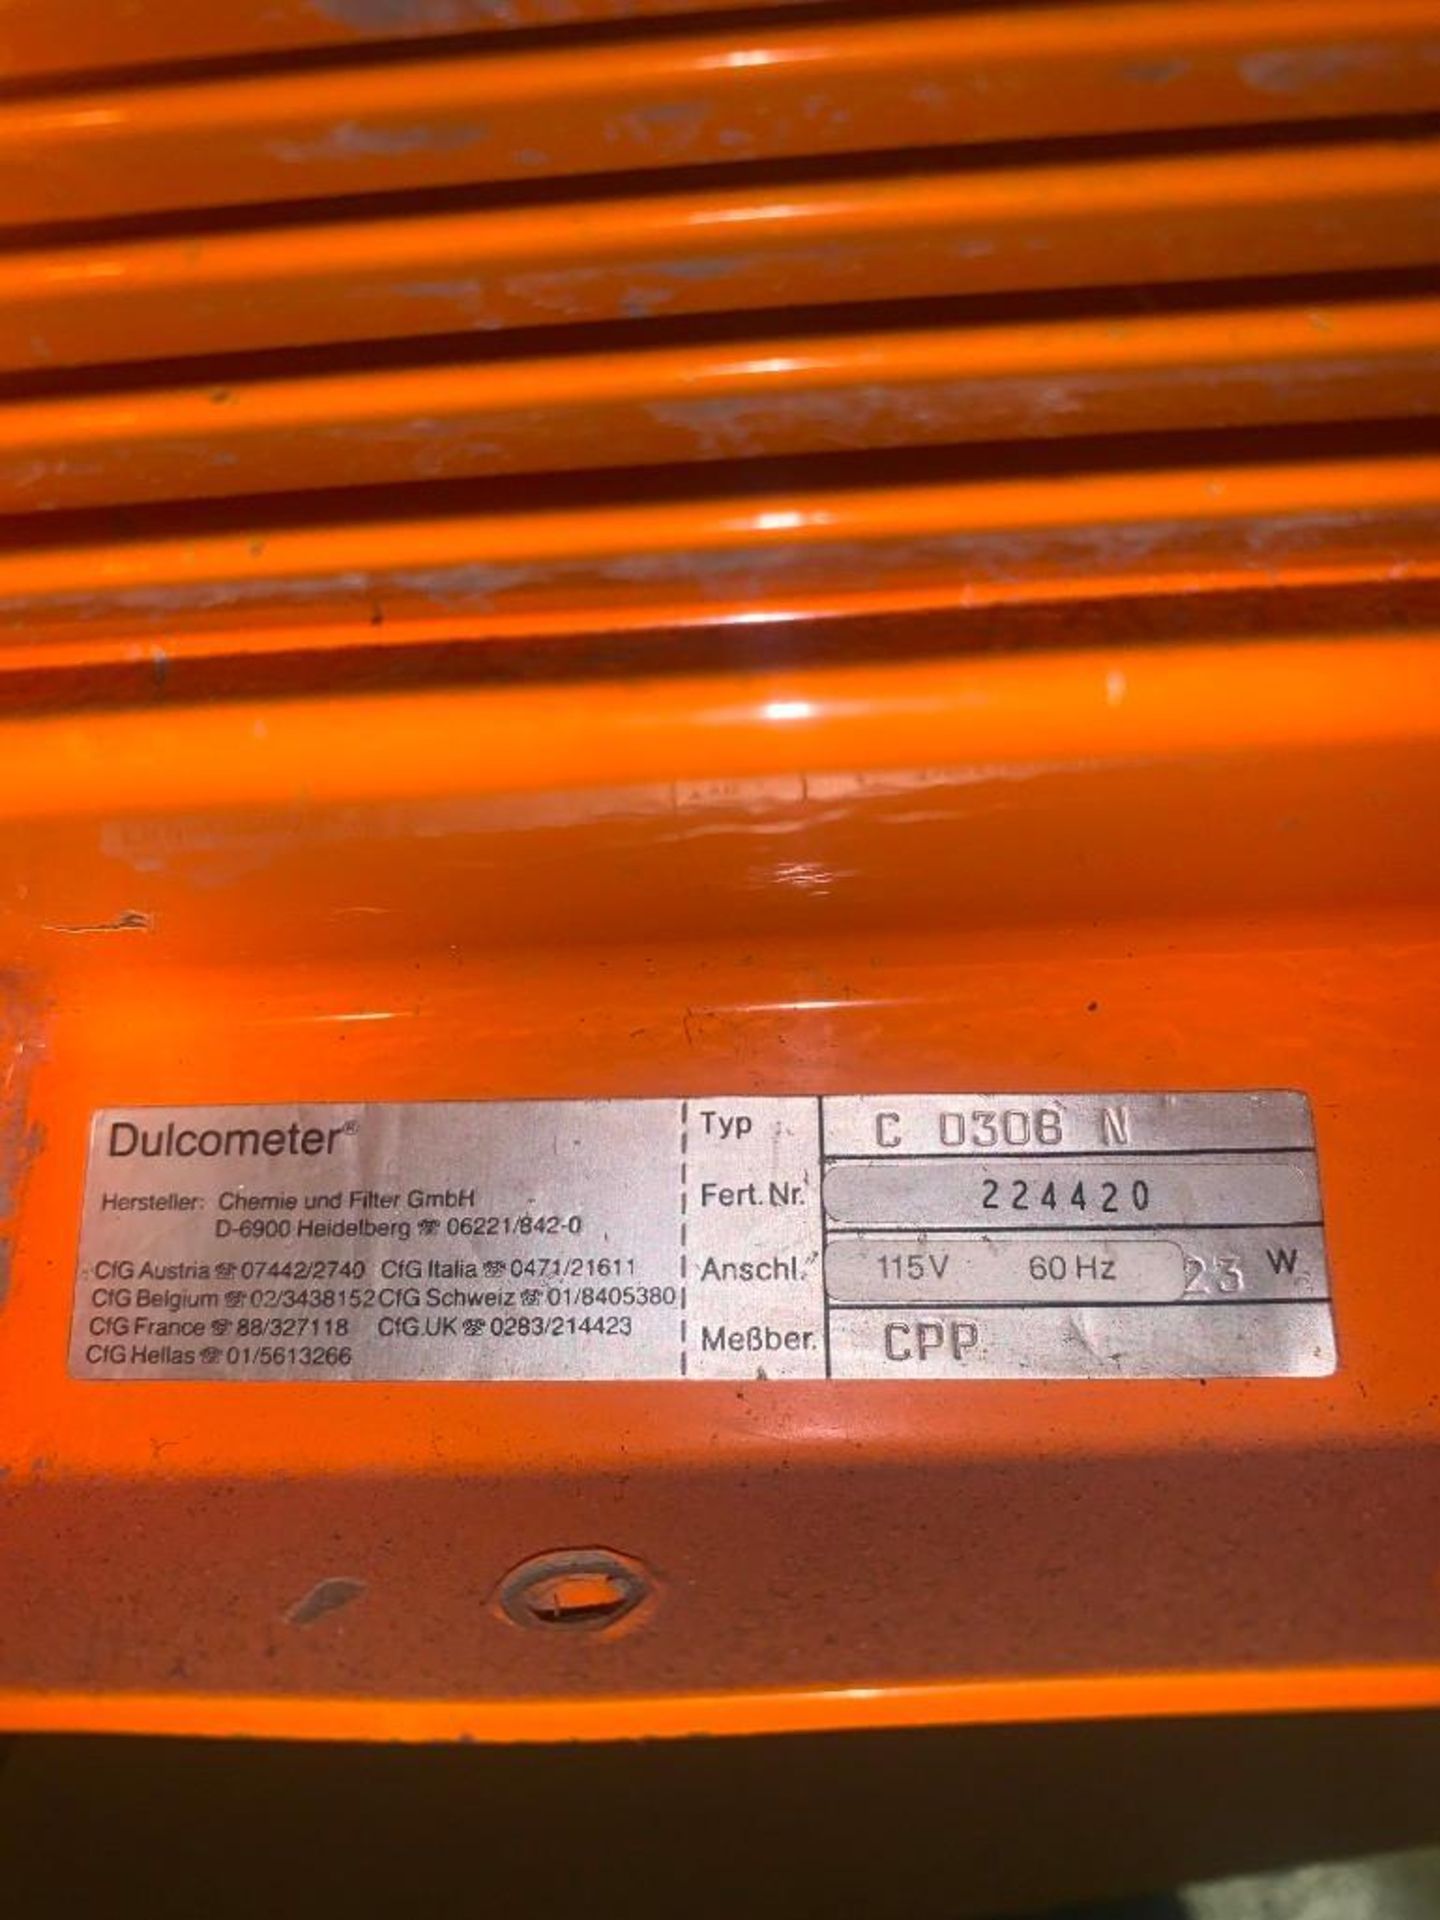 Dulcometer Prominent Metering Pump, Typ# C 0308 N, 115 V, 60 Hz, 23 W - Image 4 of 4